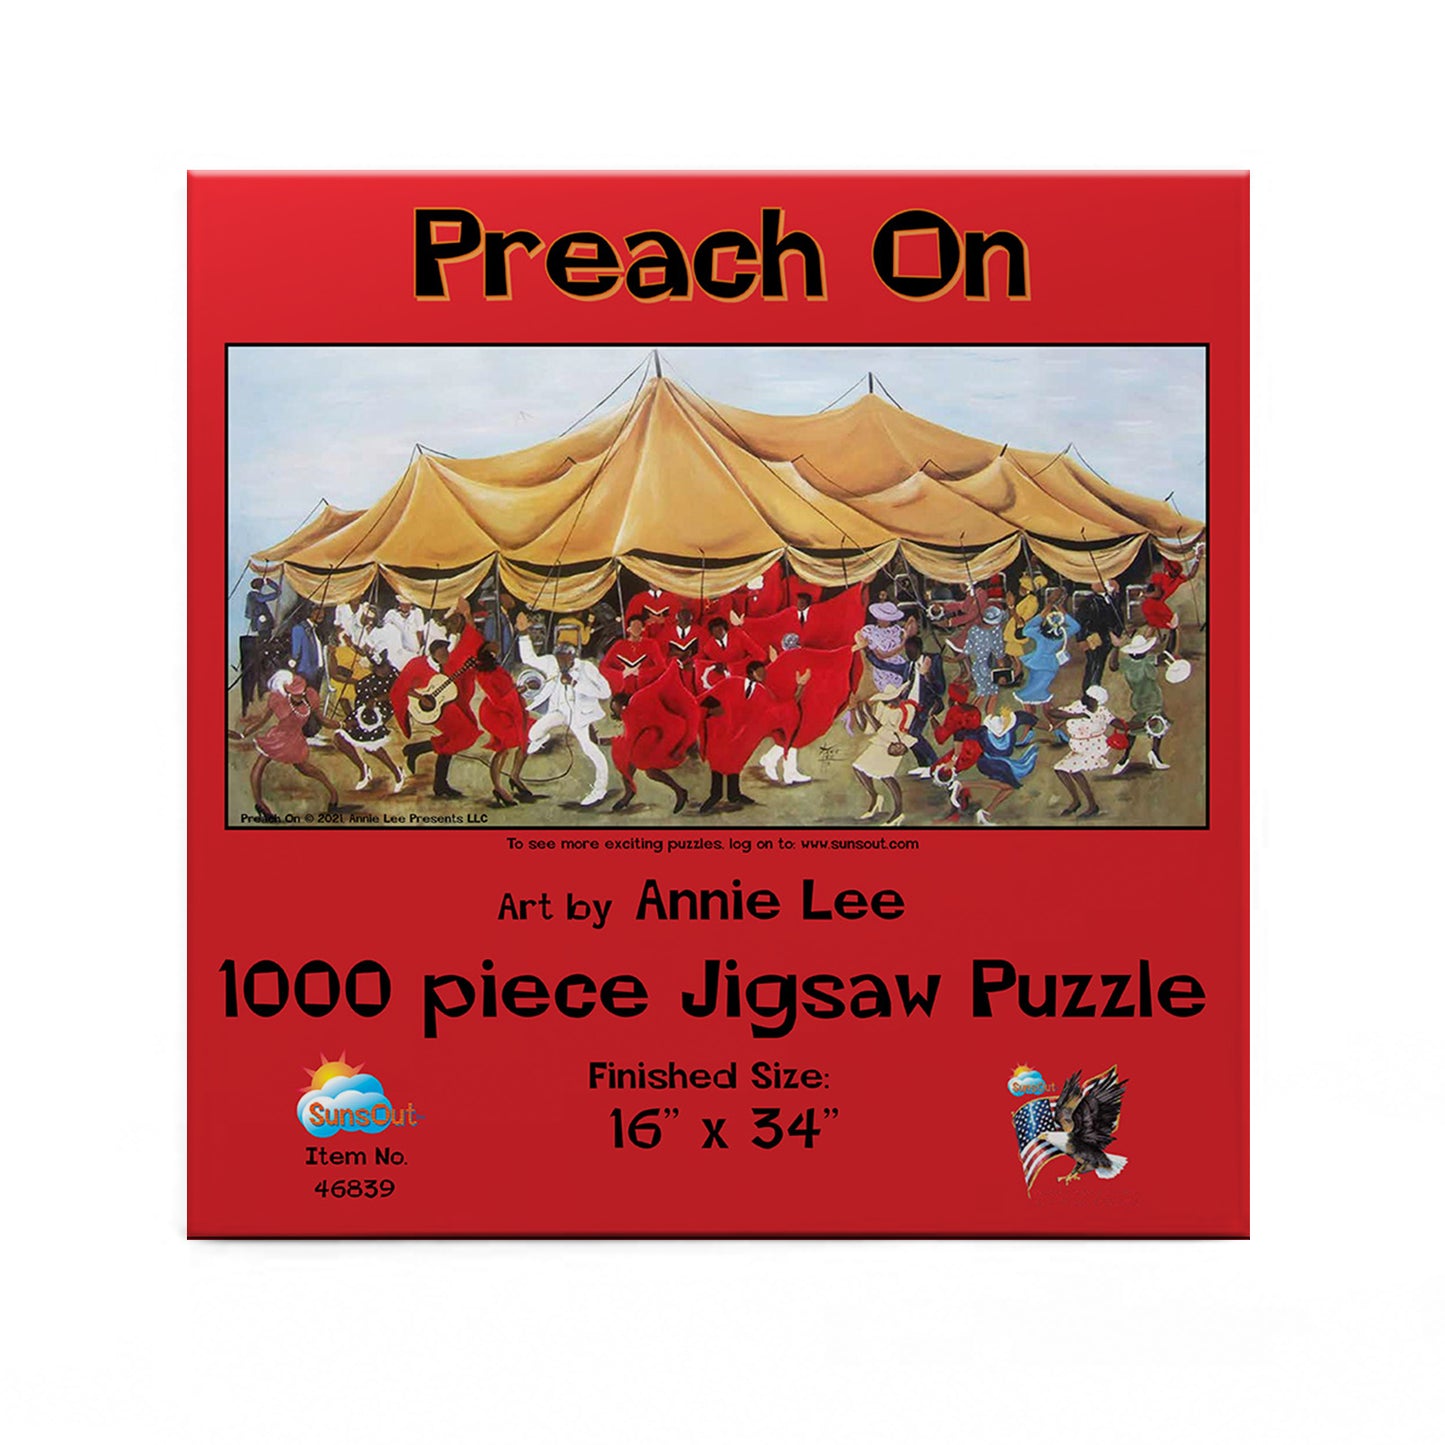 Preach On - 1000 Piece Jigsaw Puzzle